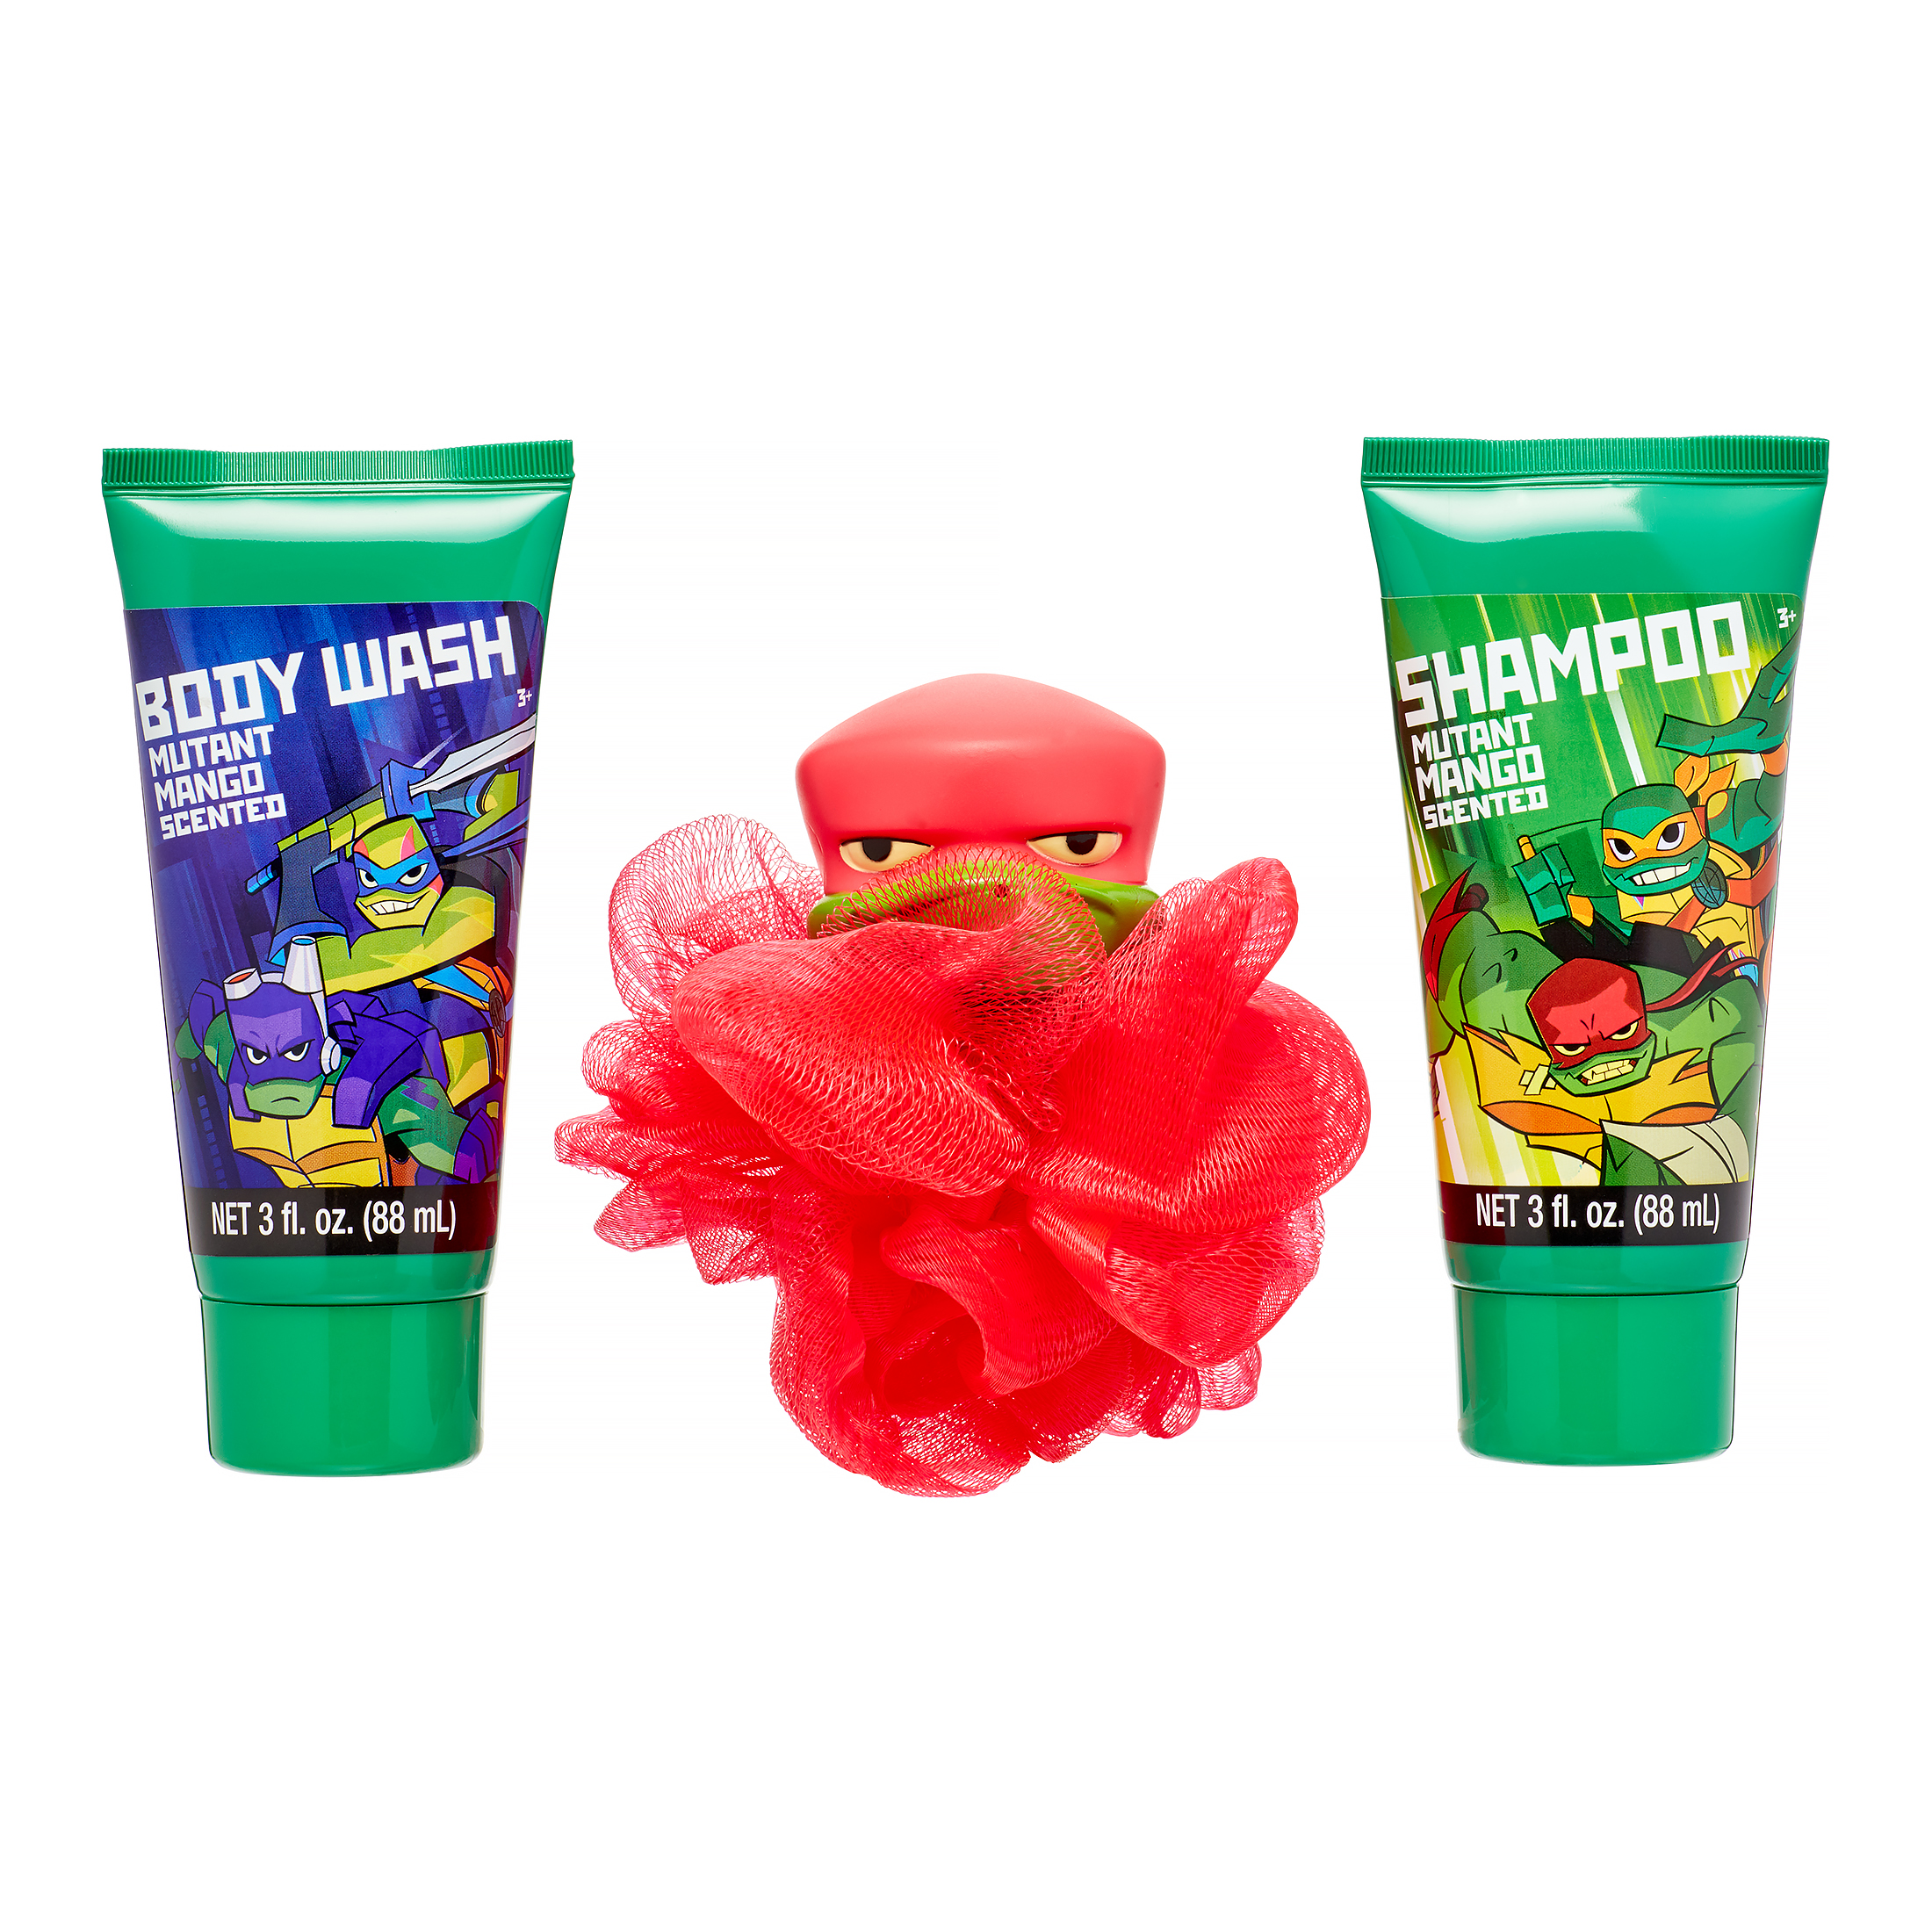 Teenage Mutant Ninja Turtles 4-Piece Soap and Scrub Body Wash and Shampoo Set - image 3 of 5